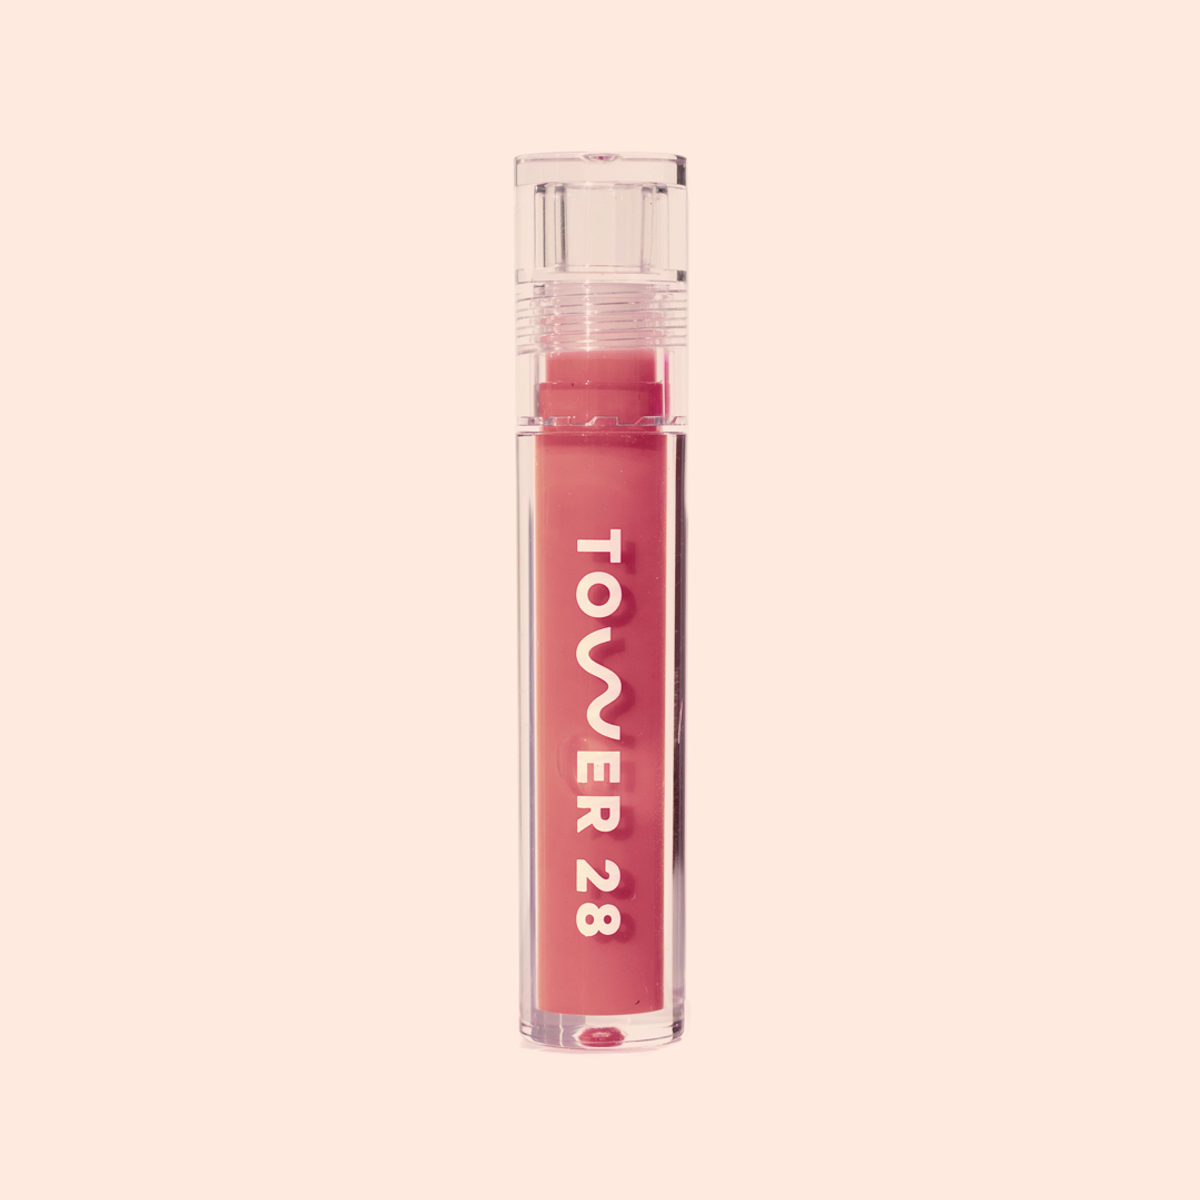 ShineOn Milky Lip Jelly Gloss in “Almond”